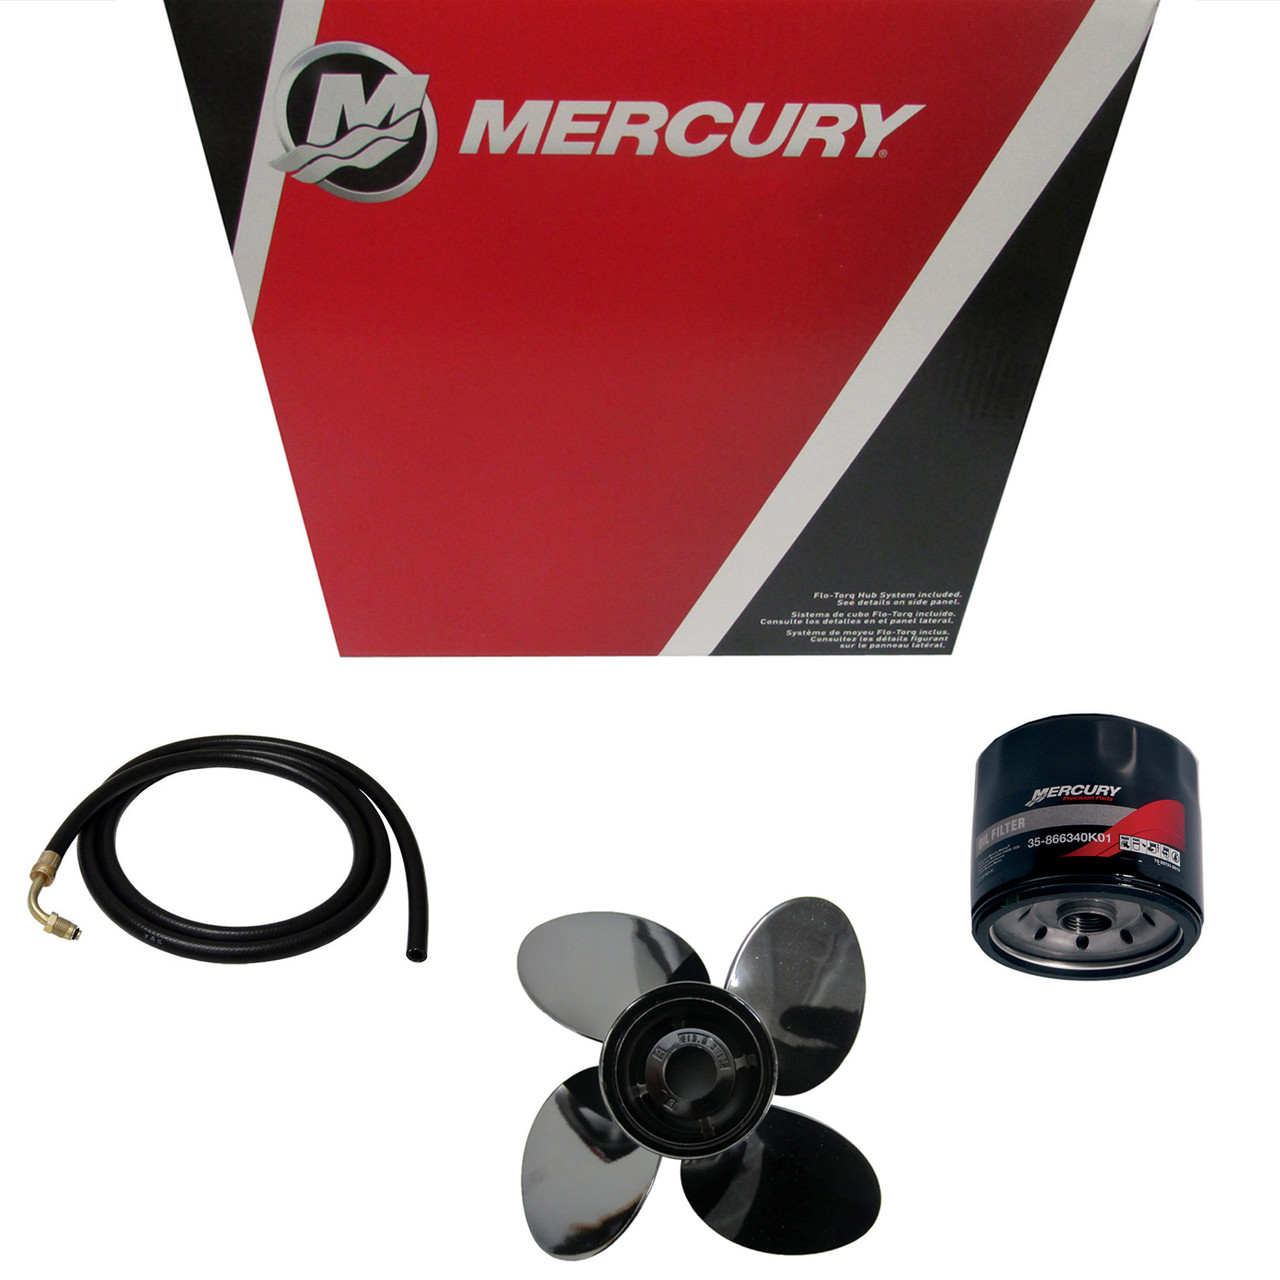 Mercury Marine / Mercruiser New OEM Installer Tool, 91-93004A2